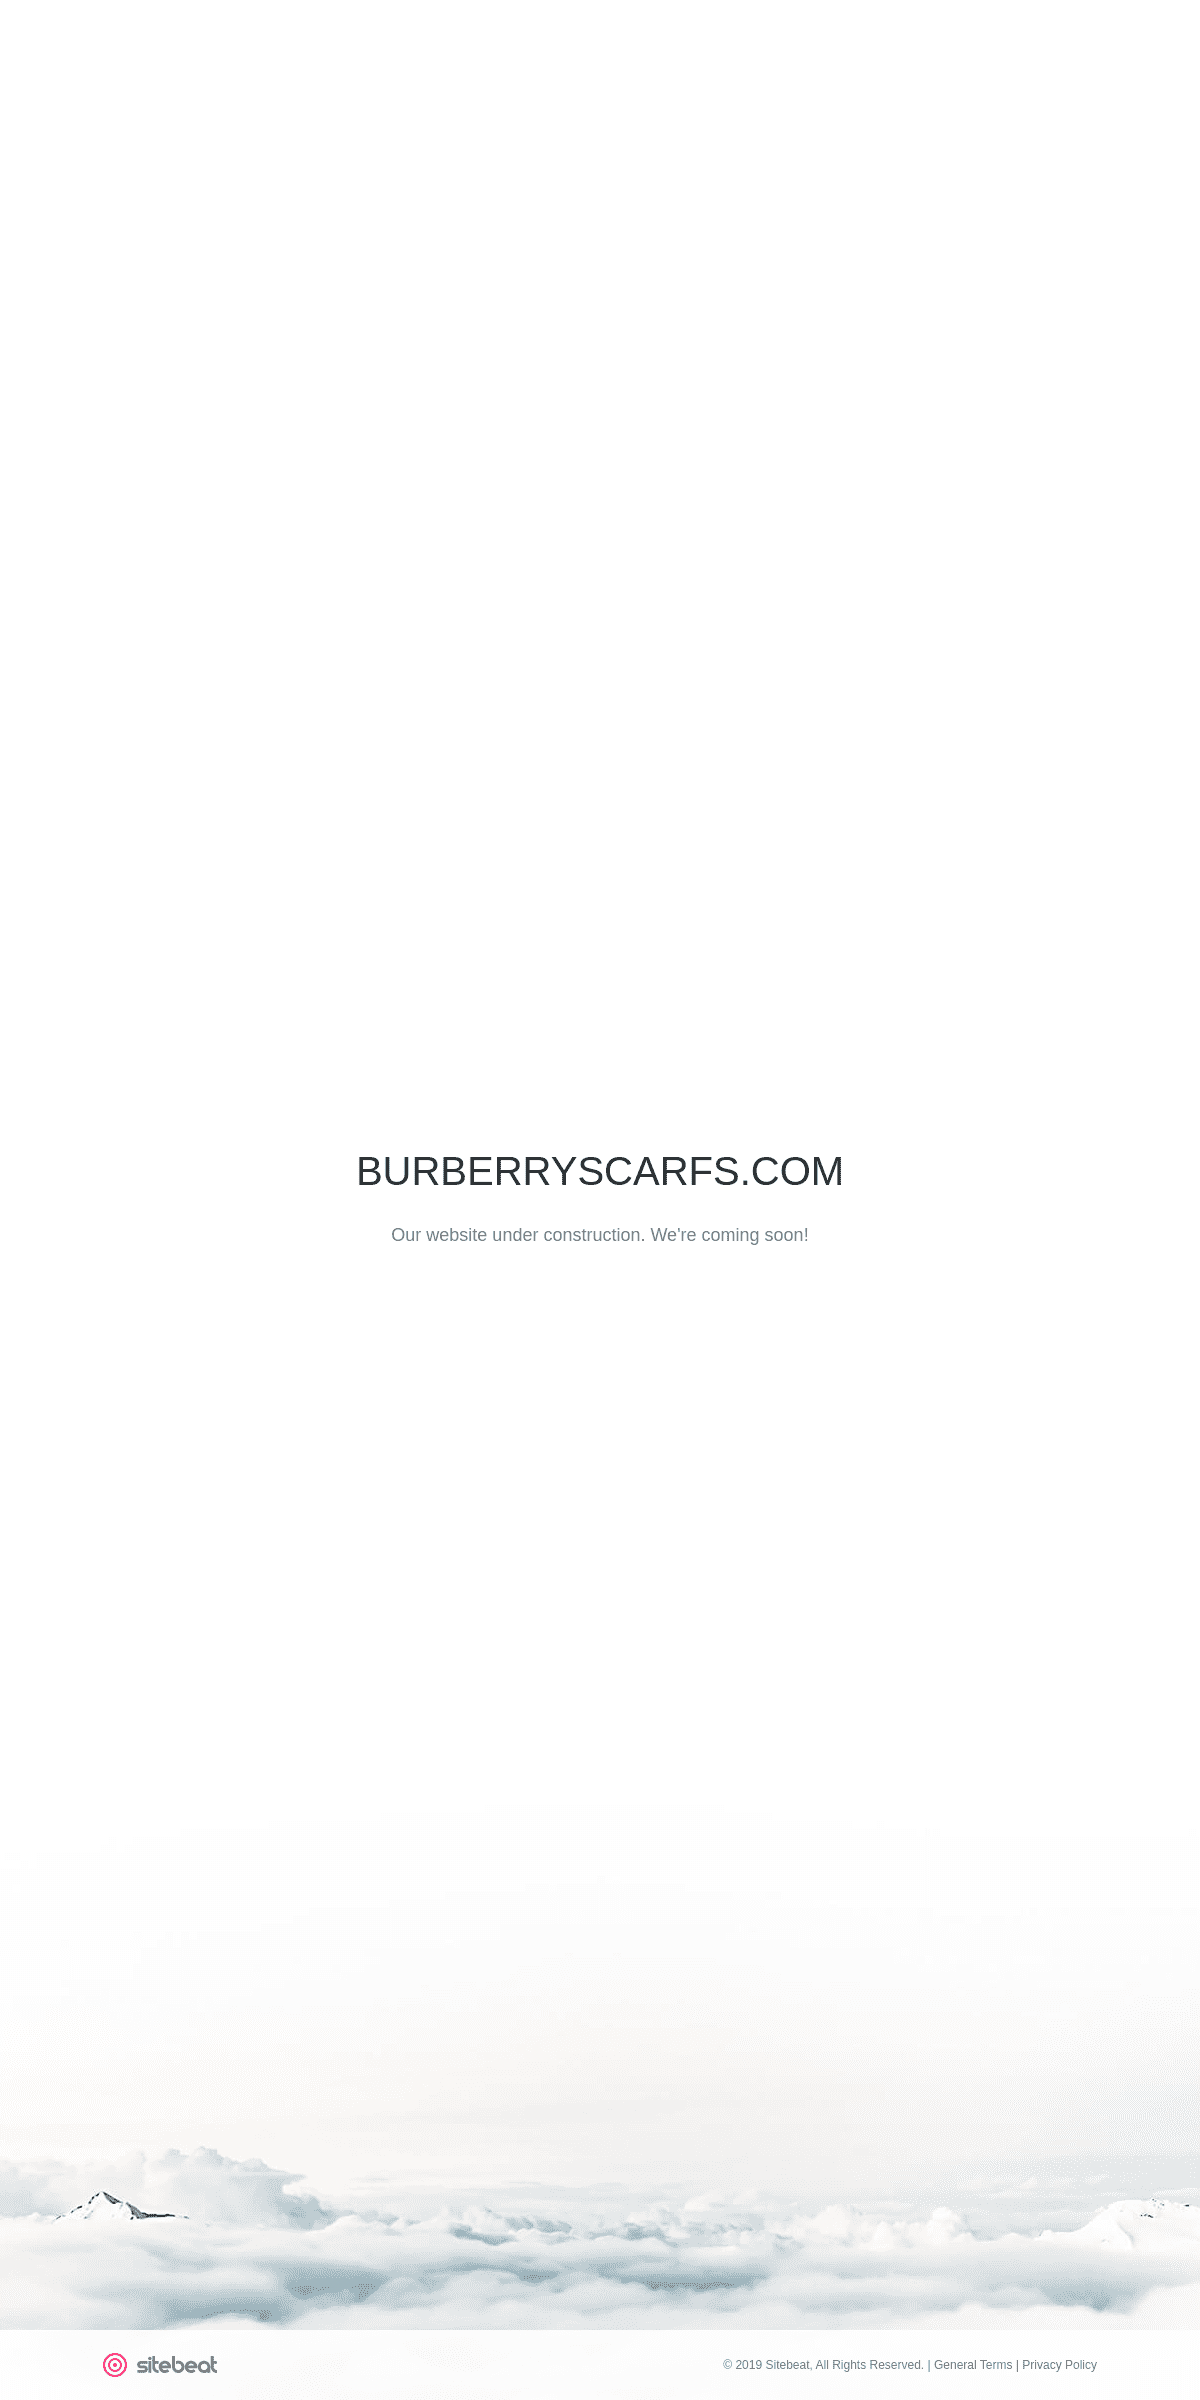 A complete backup of burberryscarfs.com